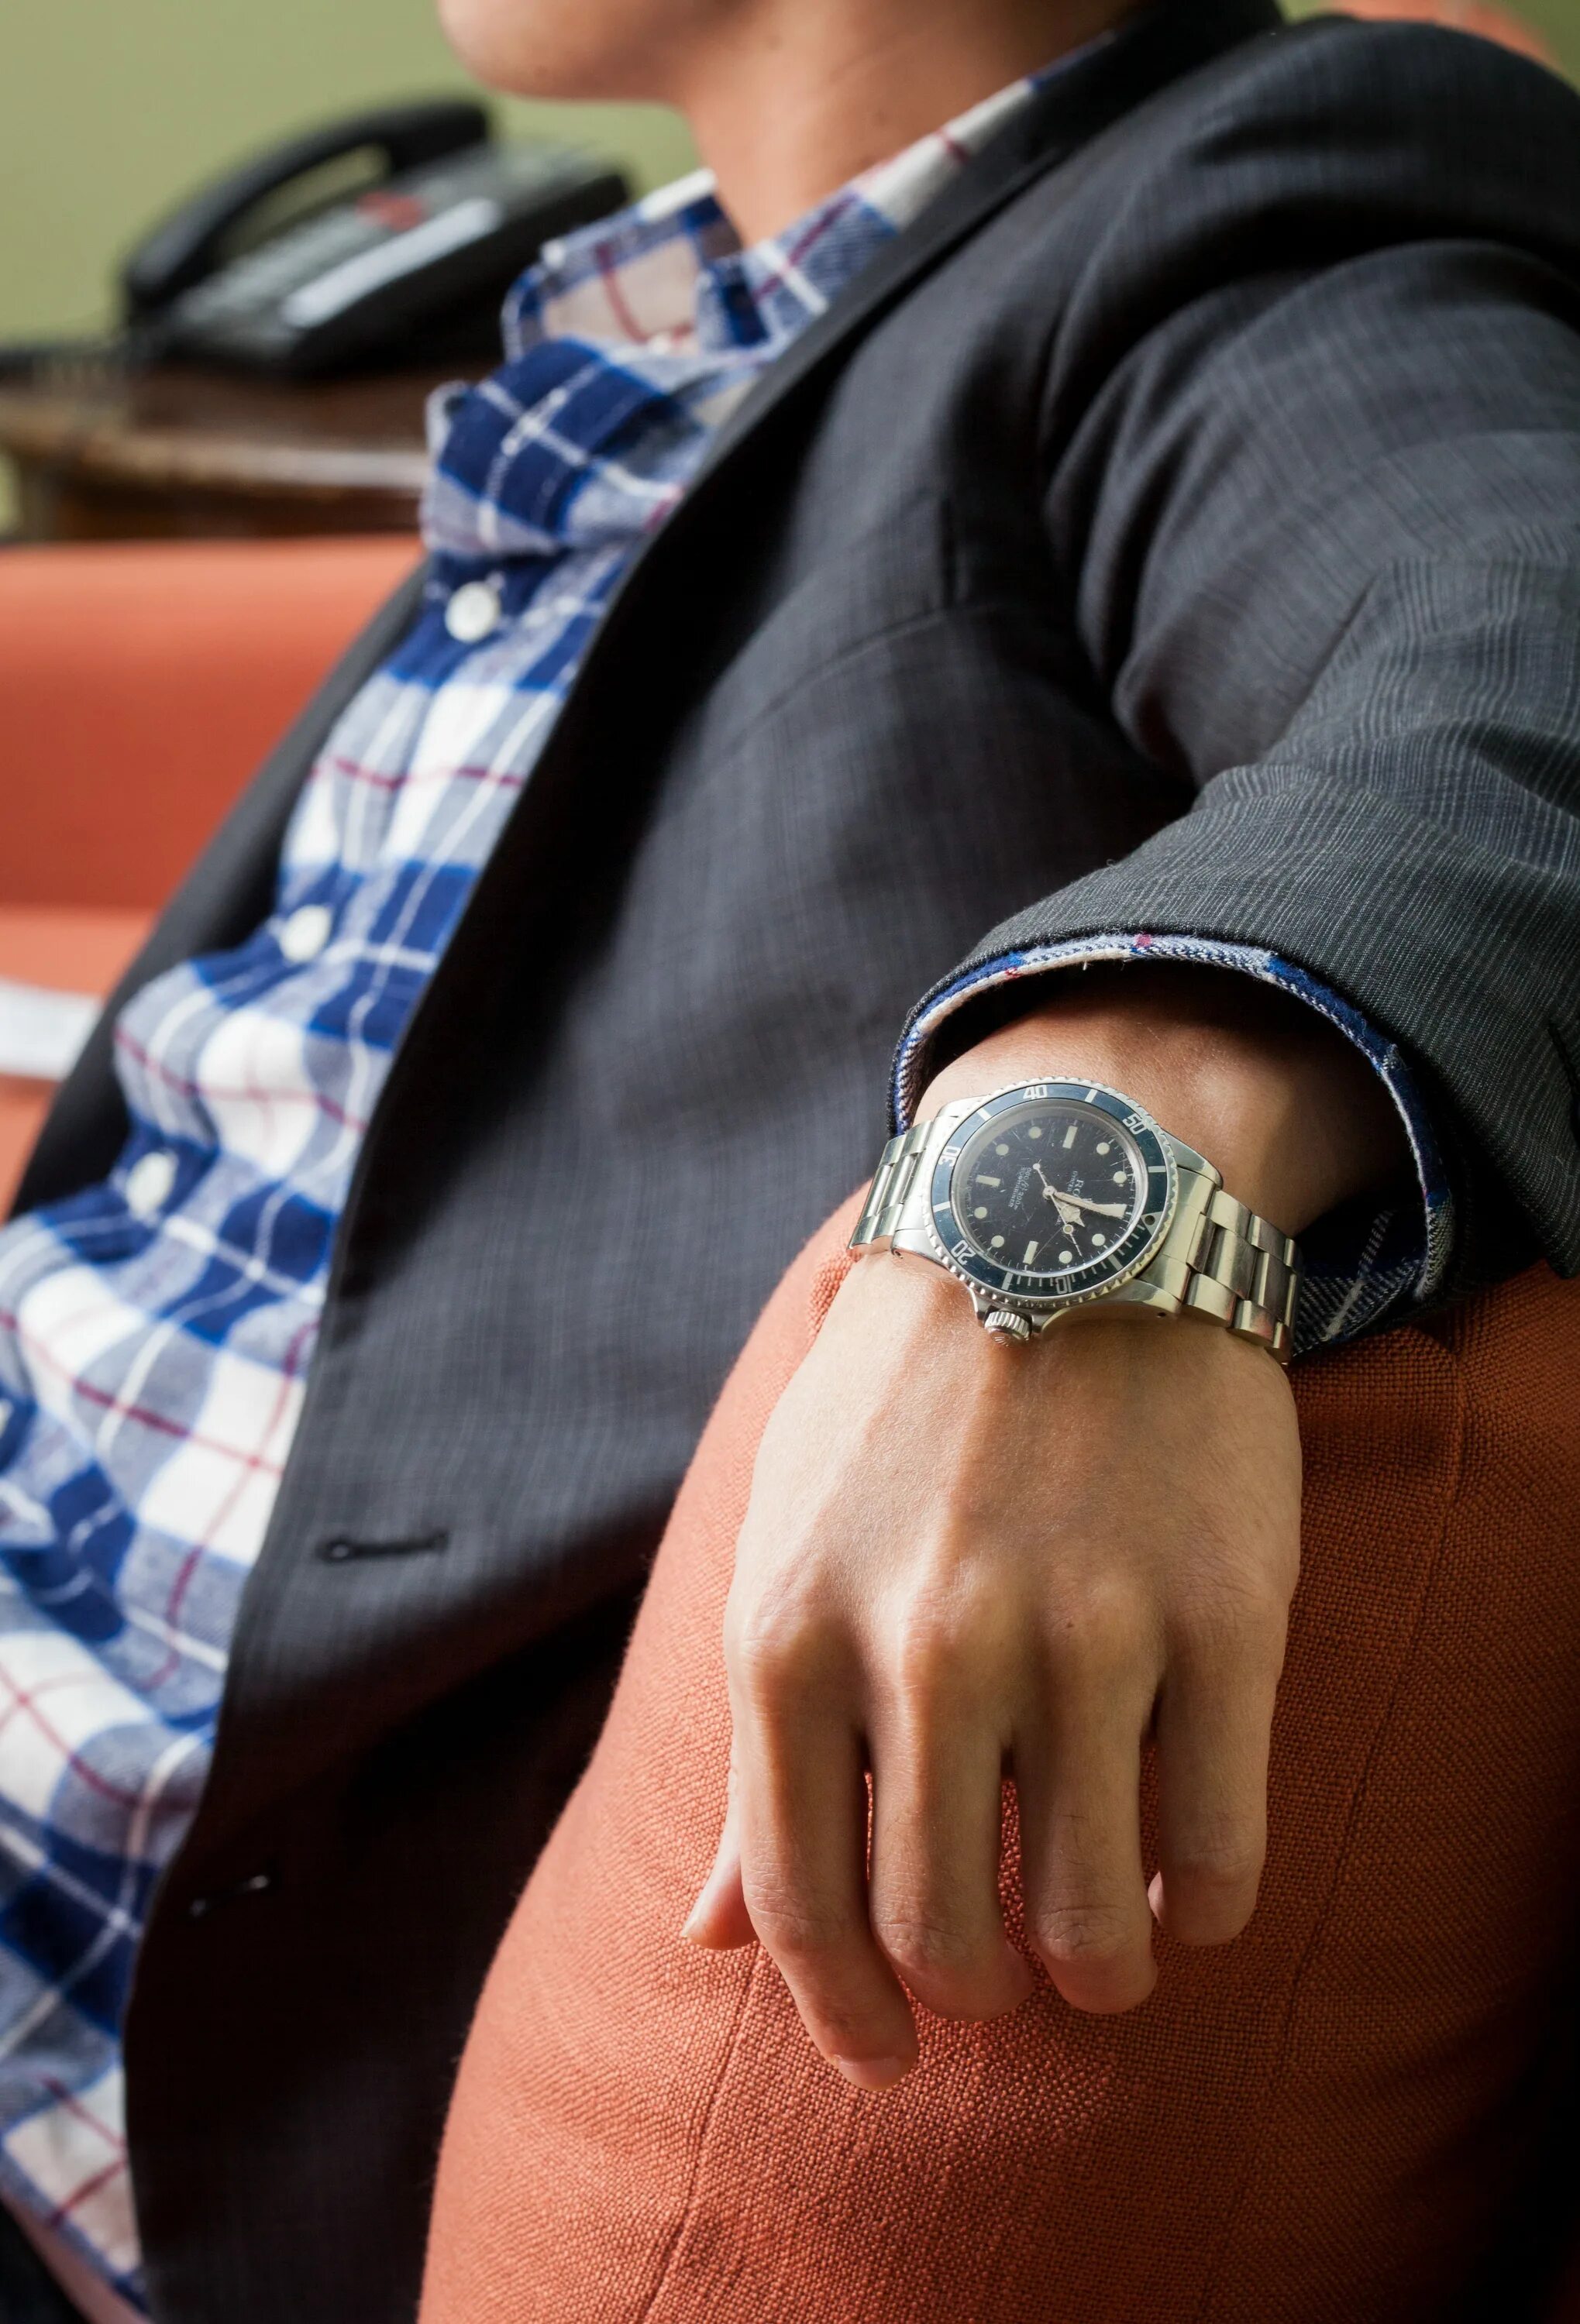 Rolex Submariner on hand. Мужские часы на руке. Рука часы элегантная. Мужчина с часами на руке. Как должны сидеть металлические часы